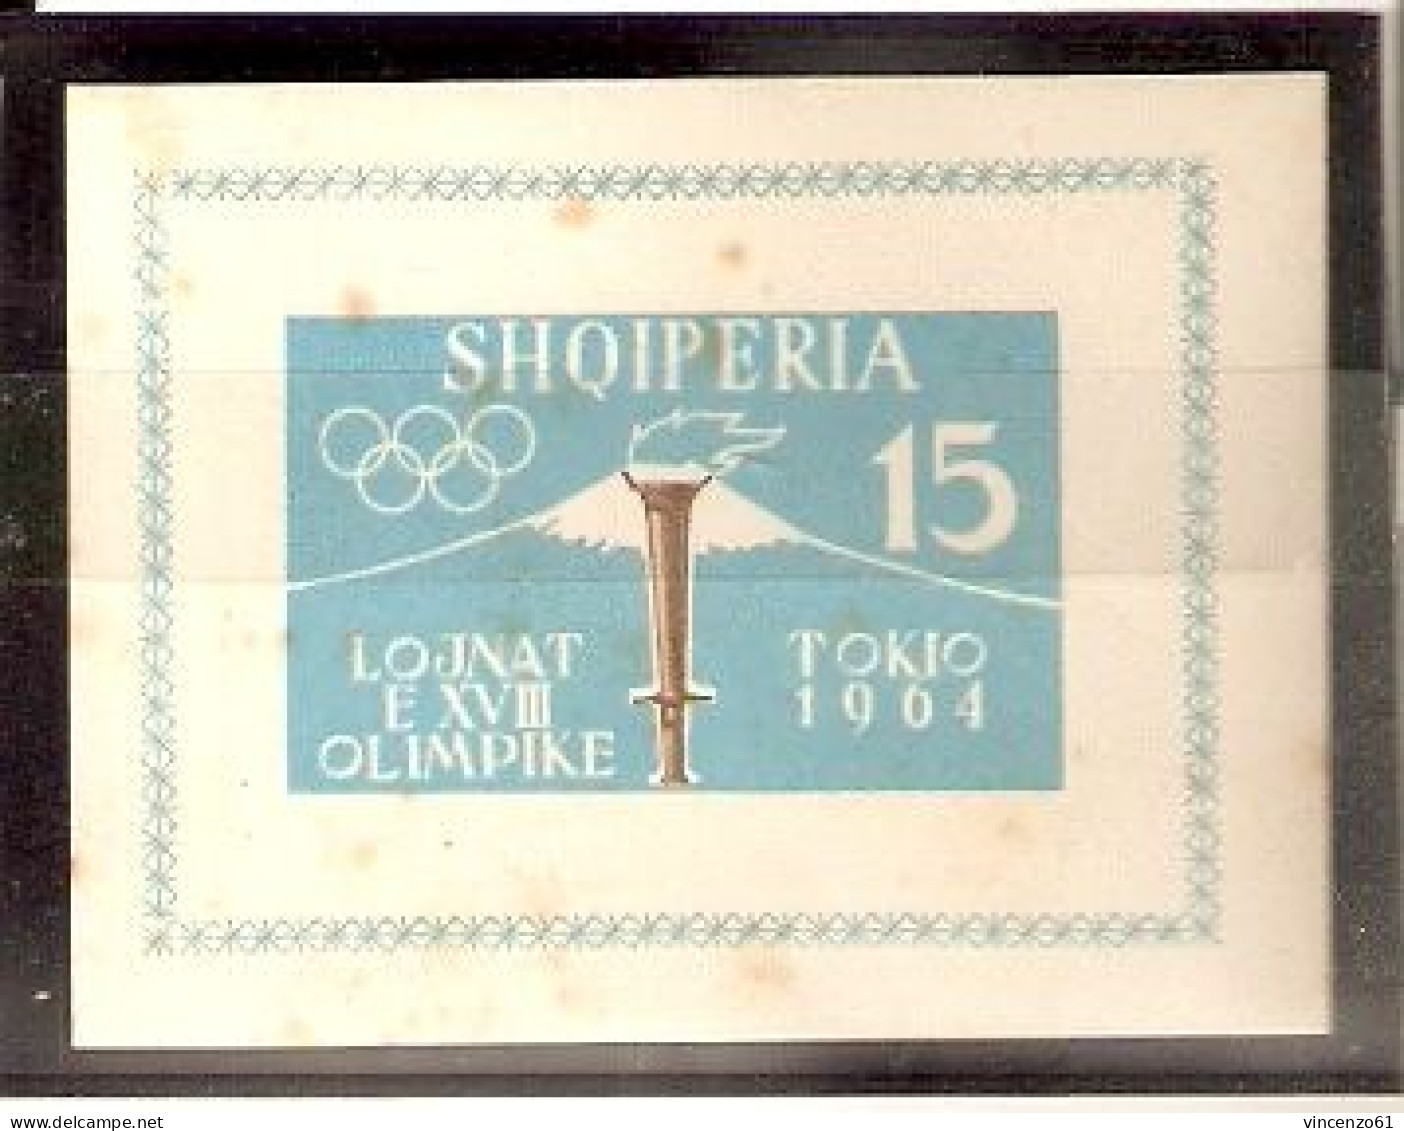 SHQIPERIA TOKIO 1964 OLIMPIC GAME UNPERFORATED - Ete 1964: Tokyo